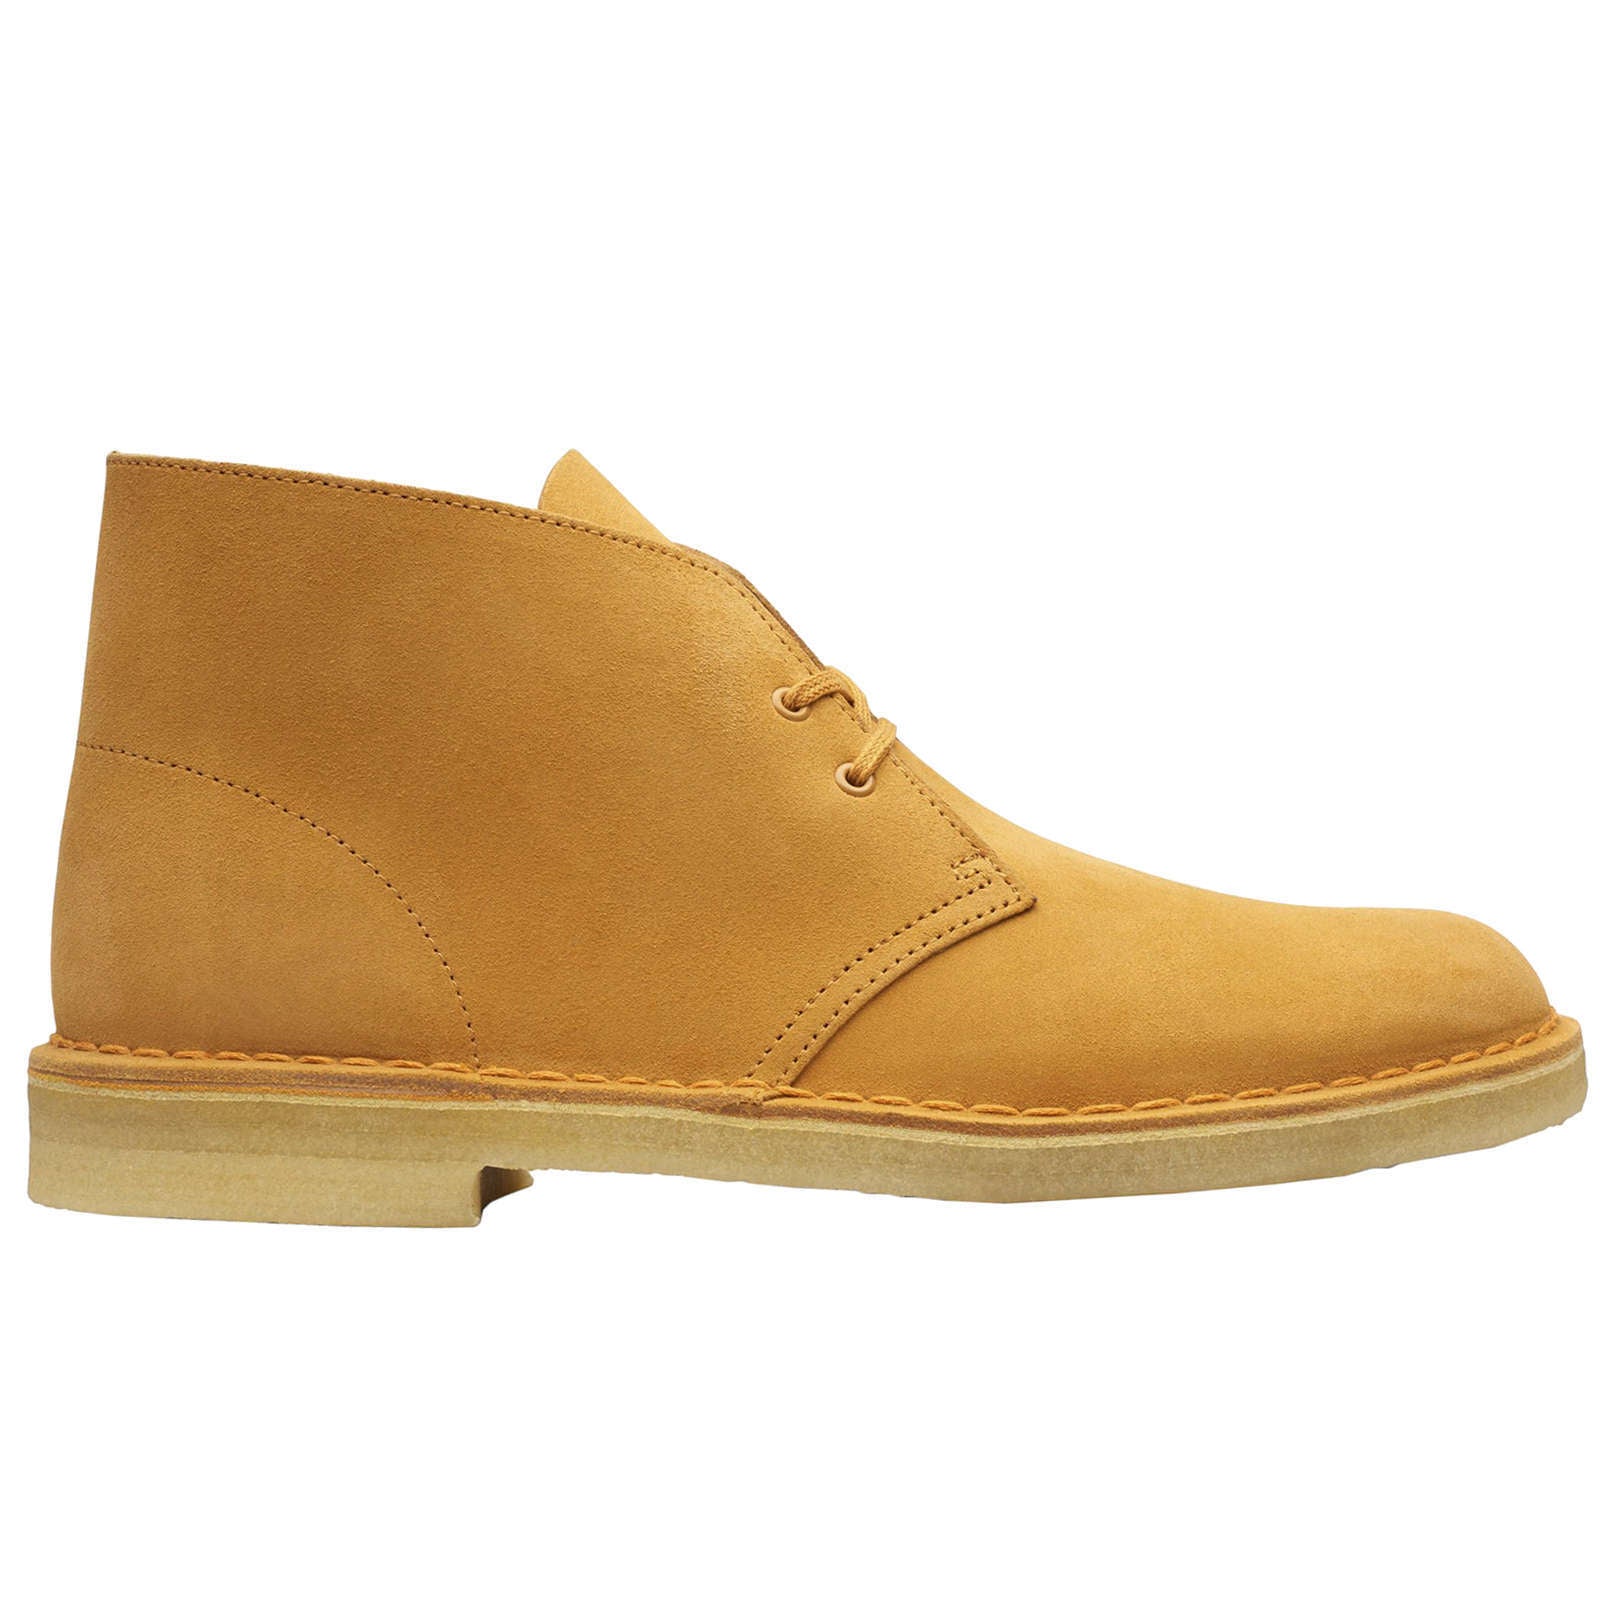 Clarks Originals Desert Boot Suede Leather Men's Boots#color_tumeric